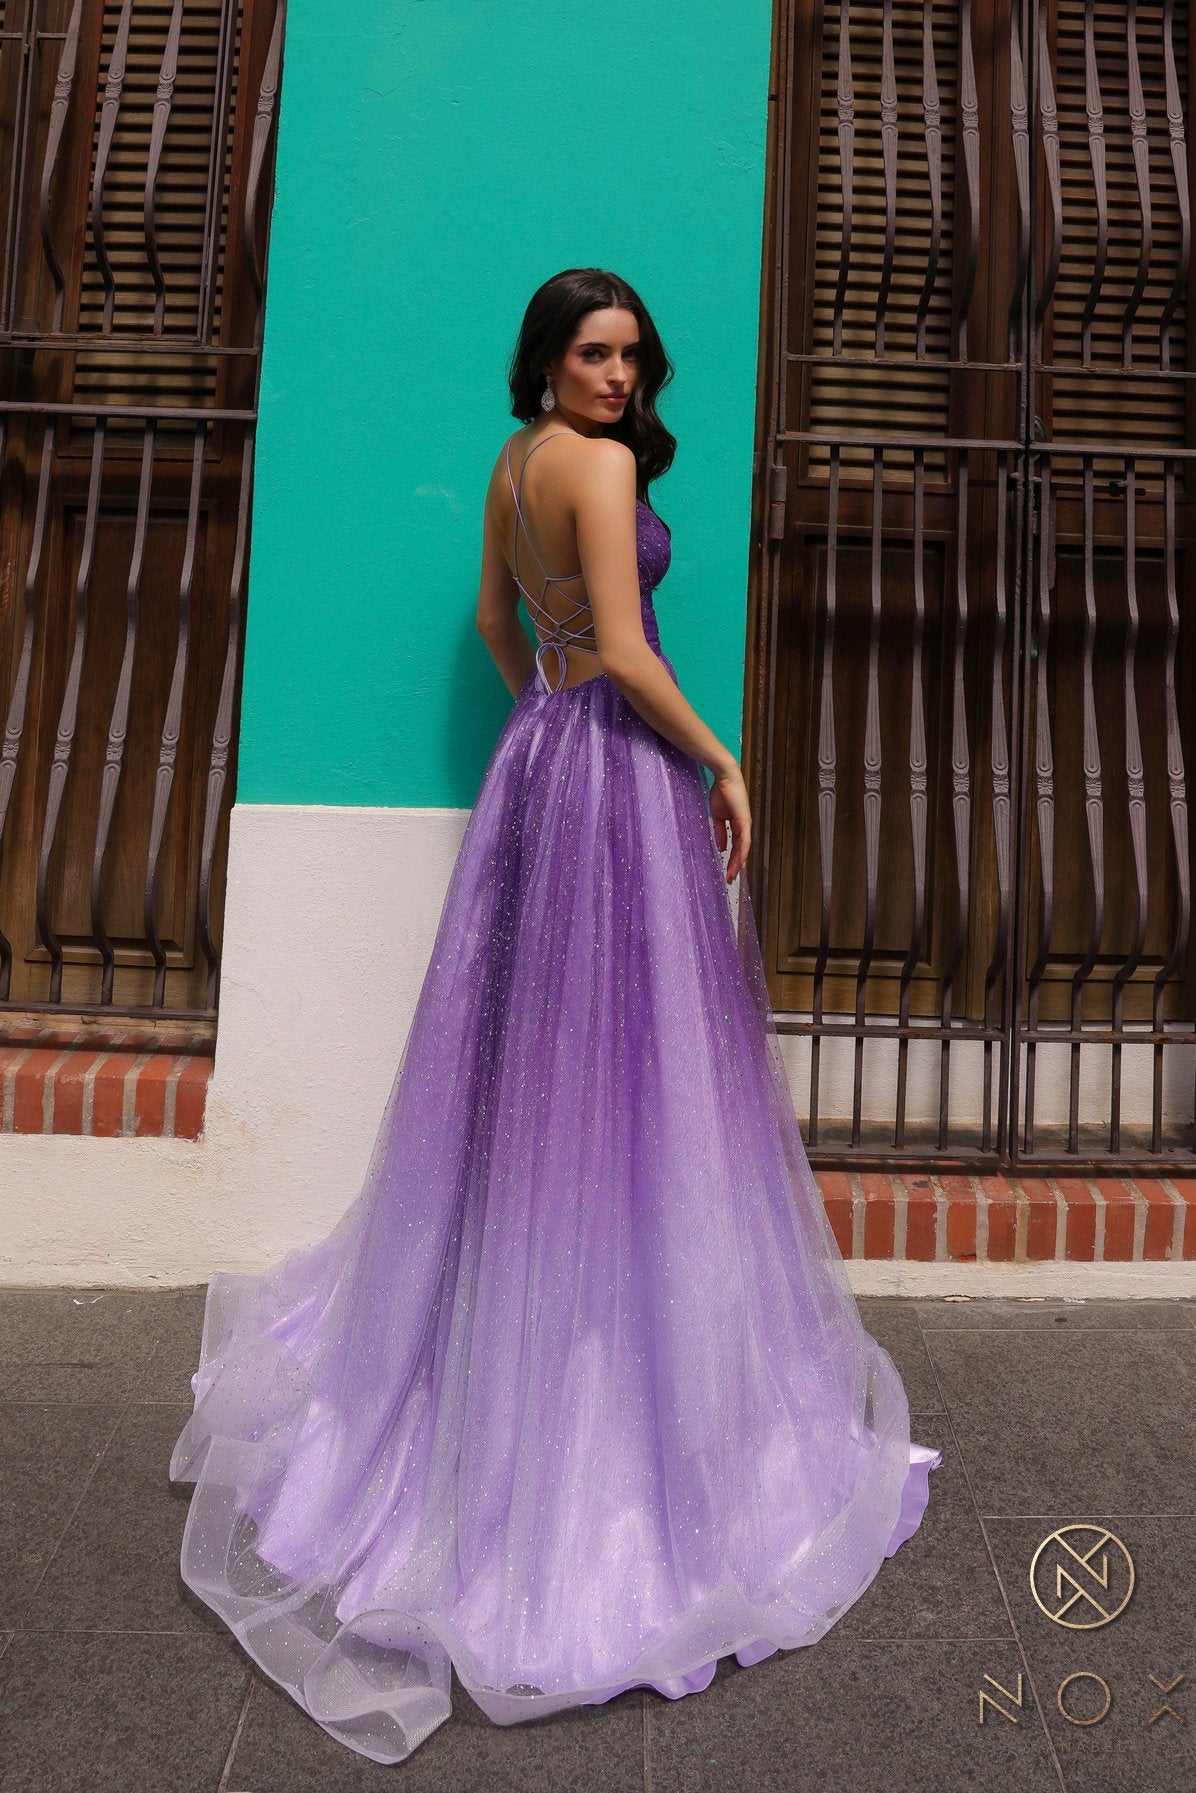 Aline V Neckline Sleeveless Wedding Dress Bridal Gown Formal Prom Gala Dress Side Slit Ombre Purple Color Sparkle Skirt Straps Open Back